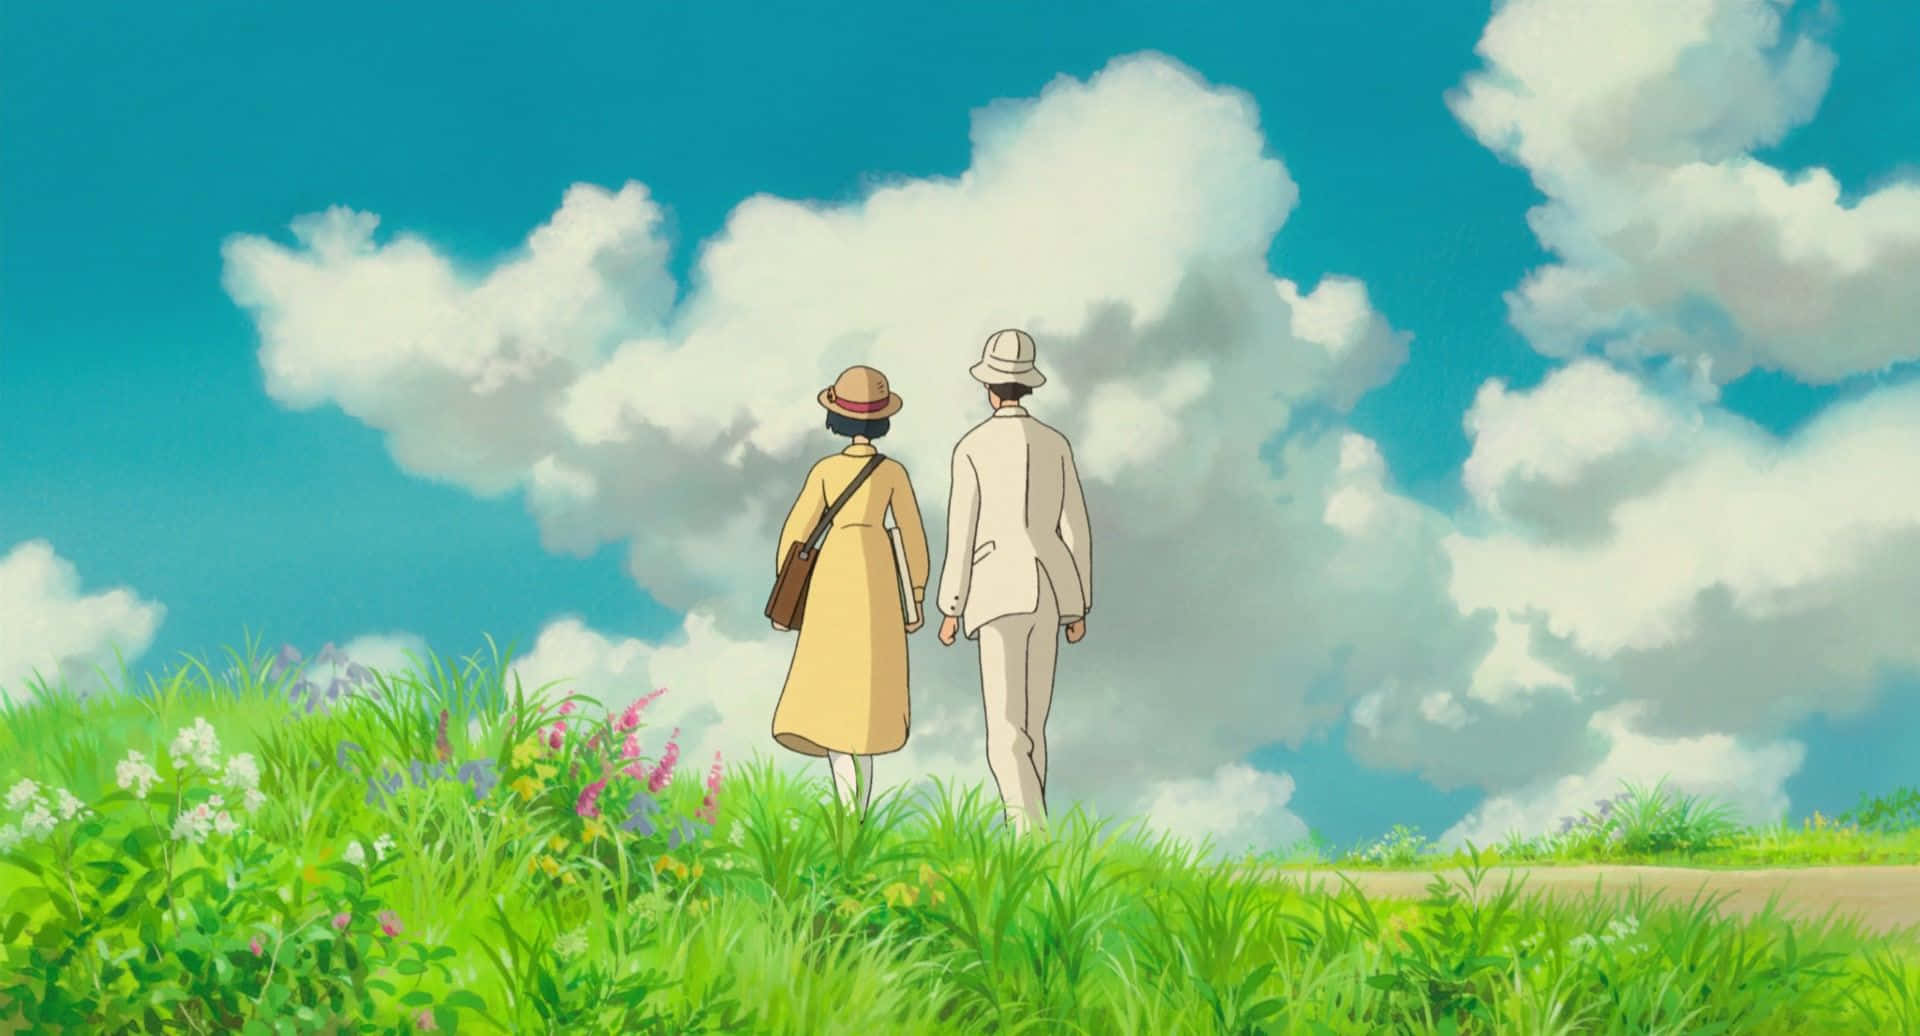 Planes soar through the sky in Miyazaki’s The Wind Rises Wallpaper